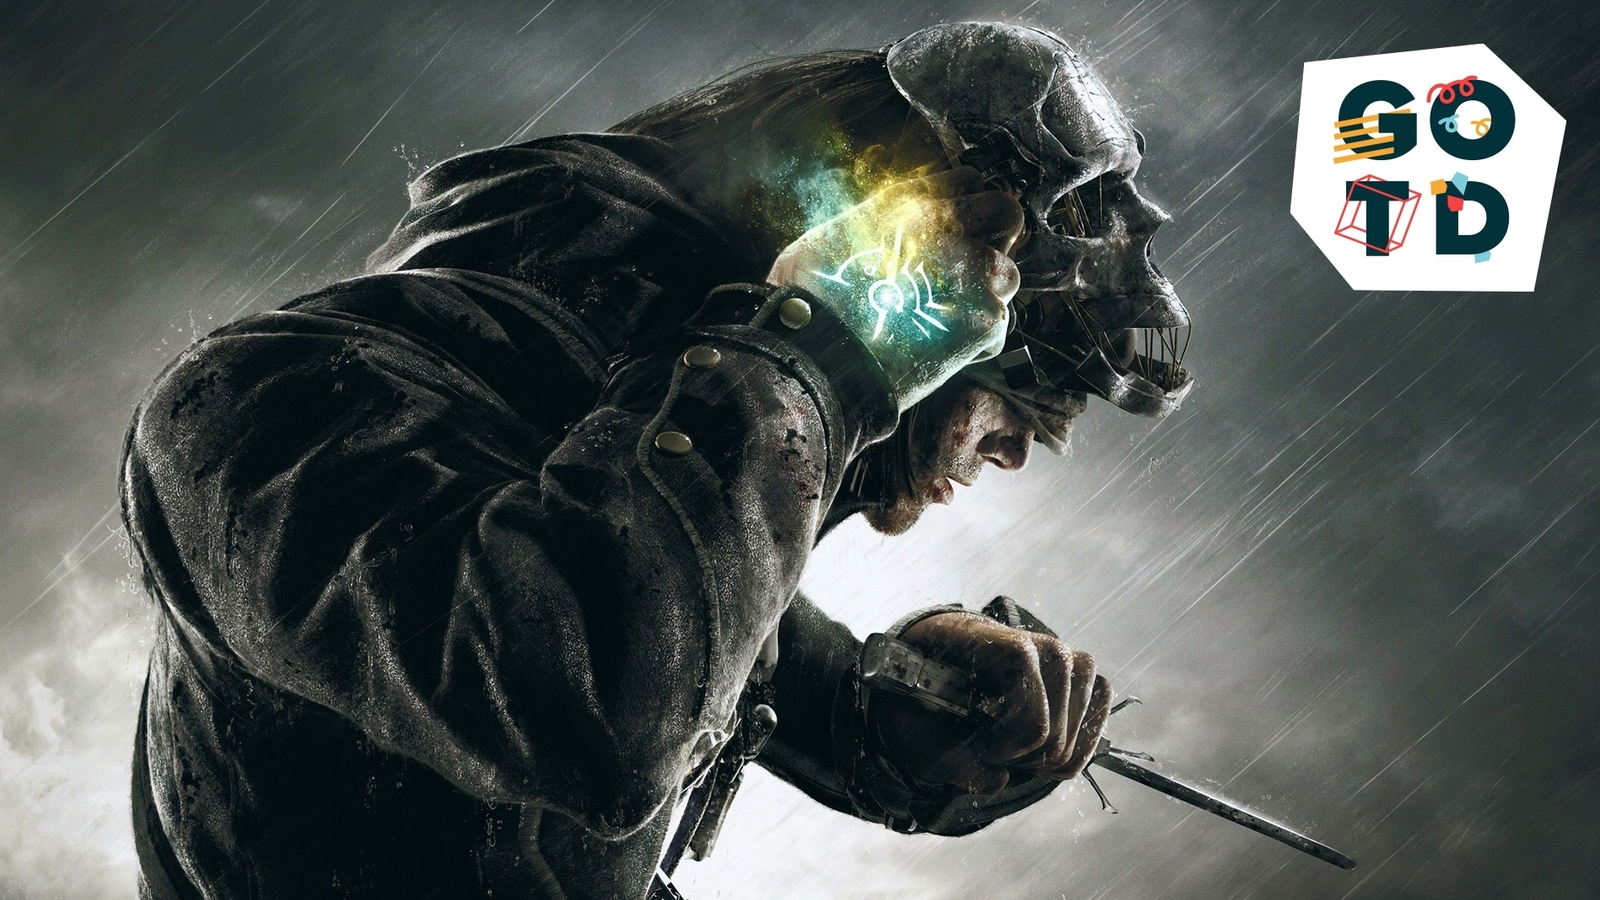  Dishonored - Xbox 360 : Everything Else